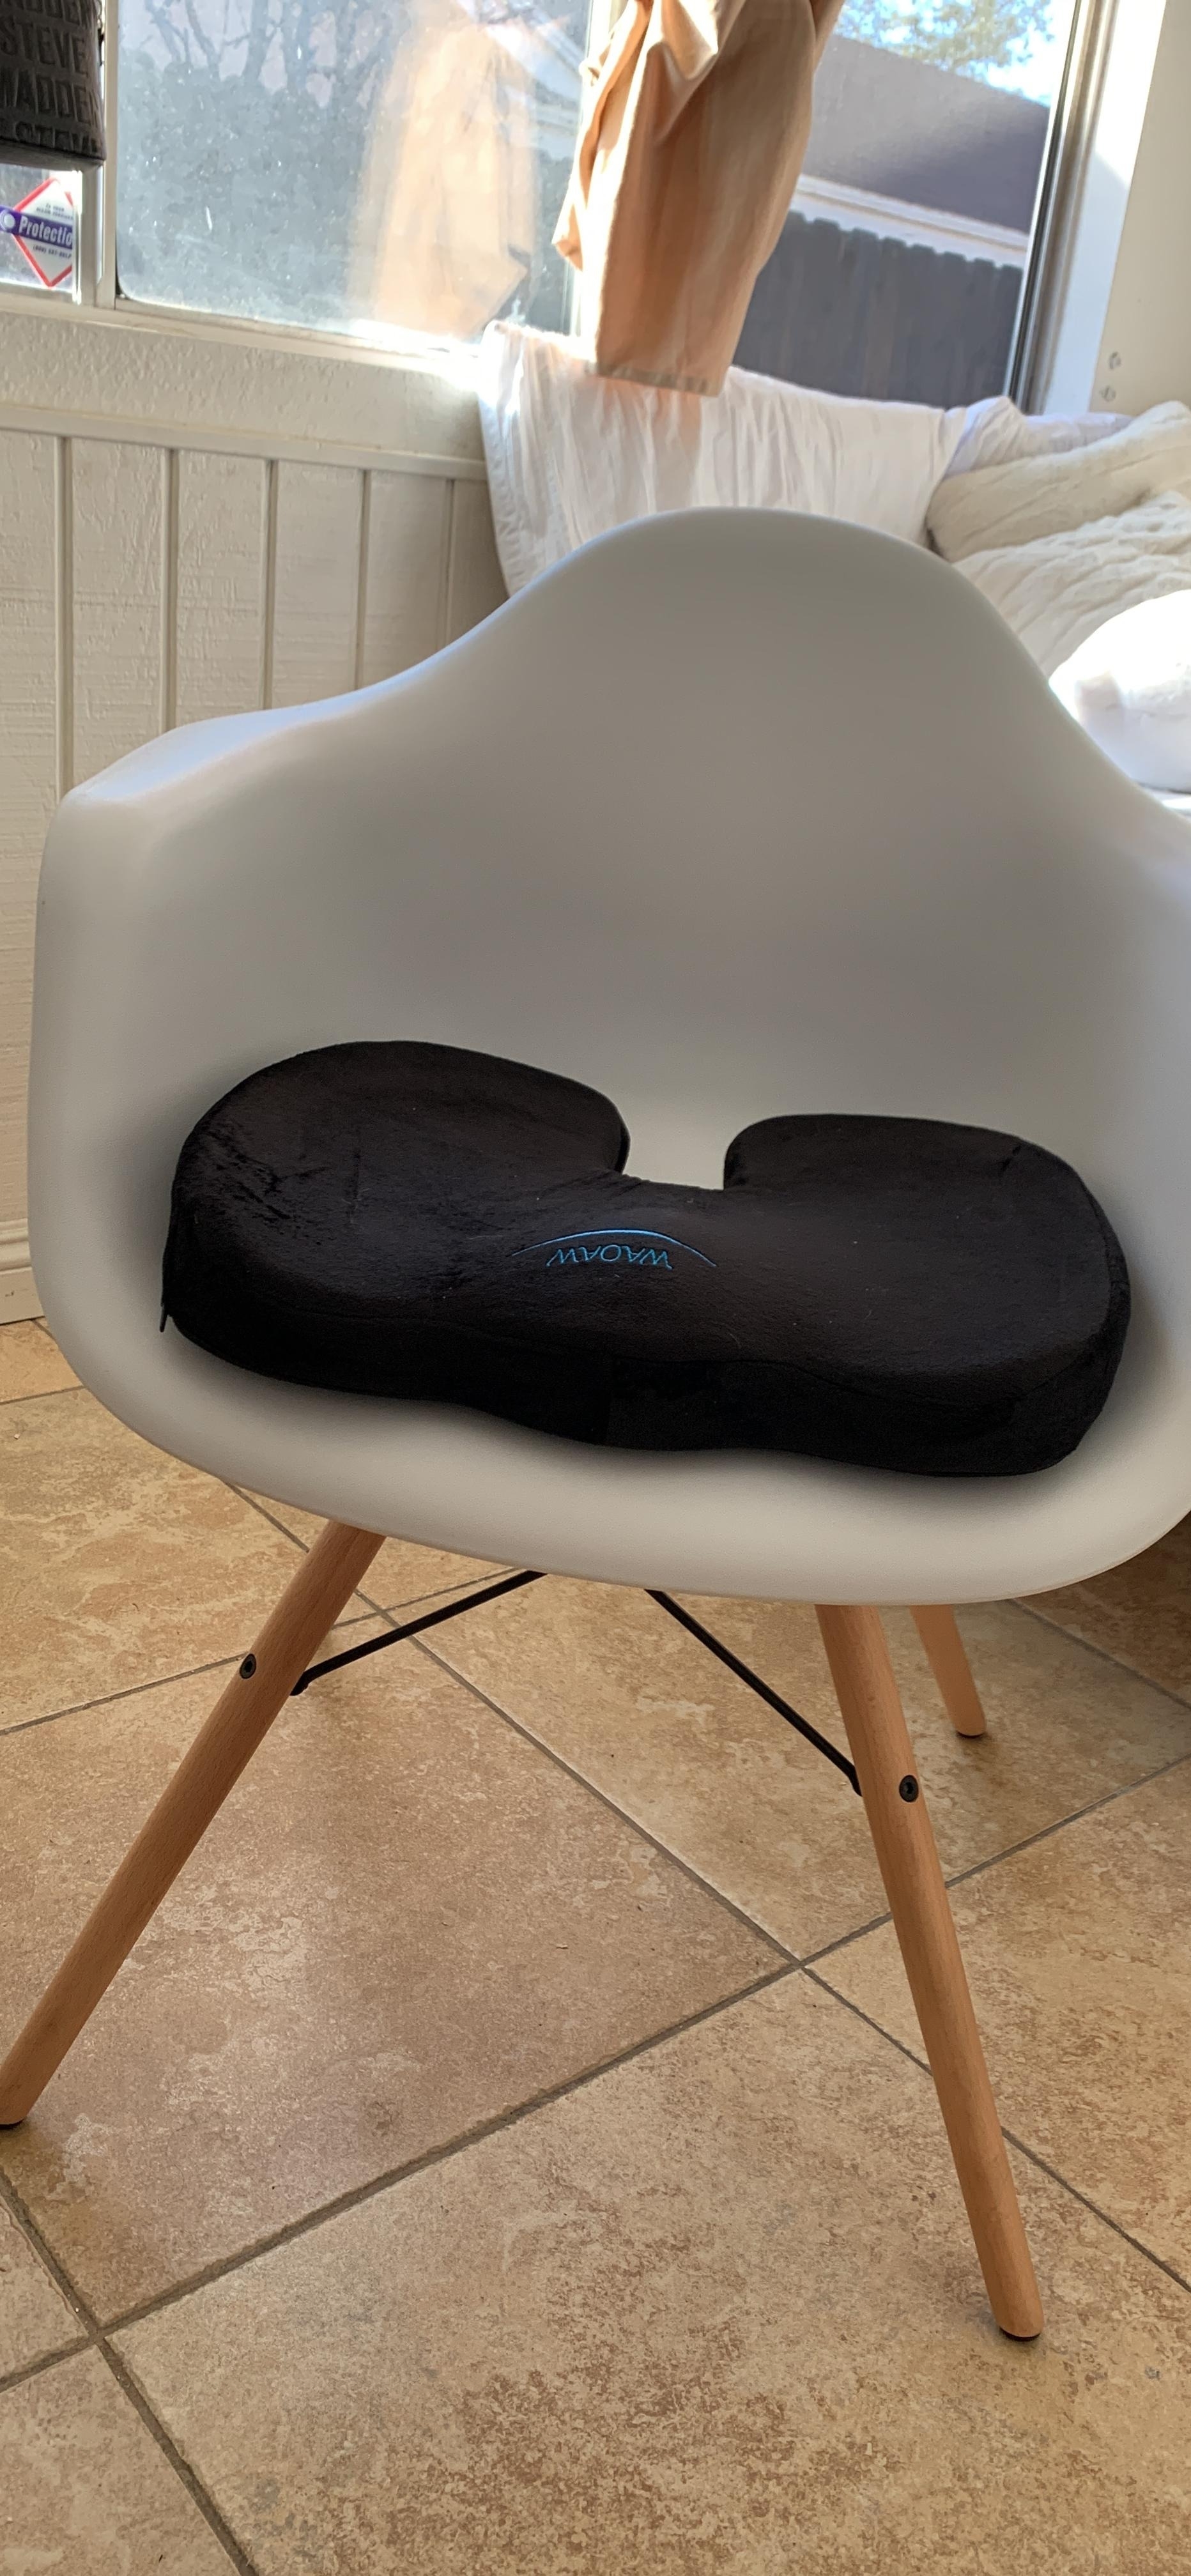 black memory foam seat cushion on white desk chair